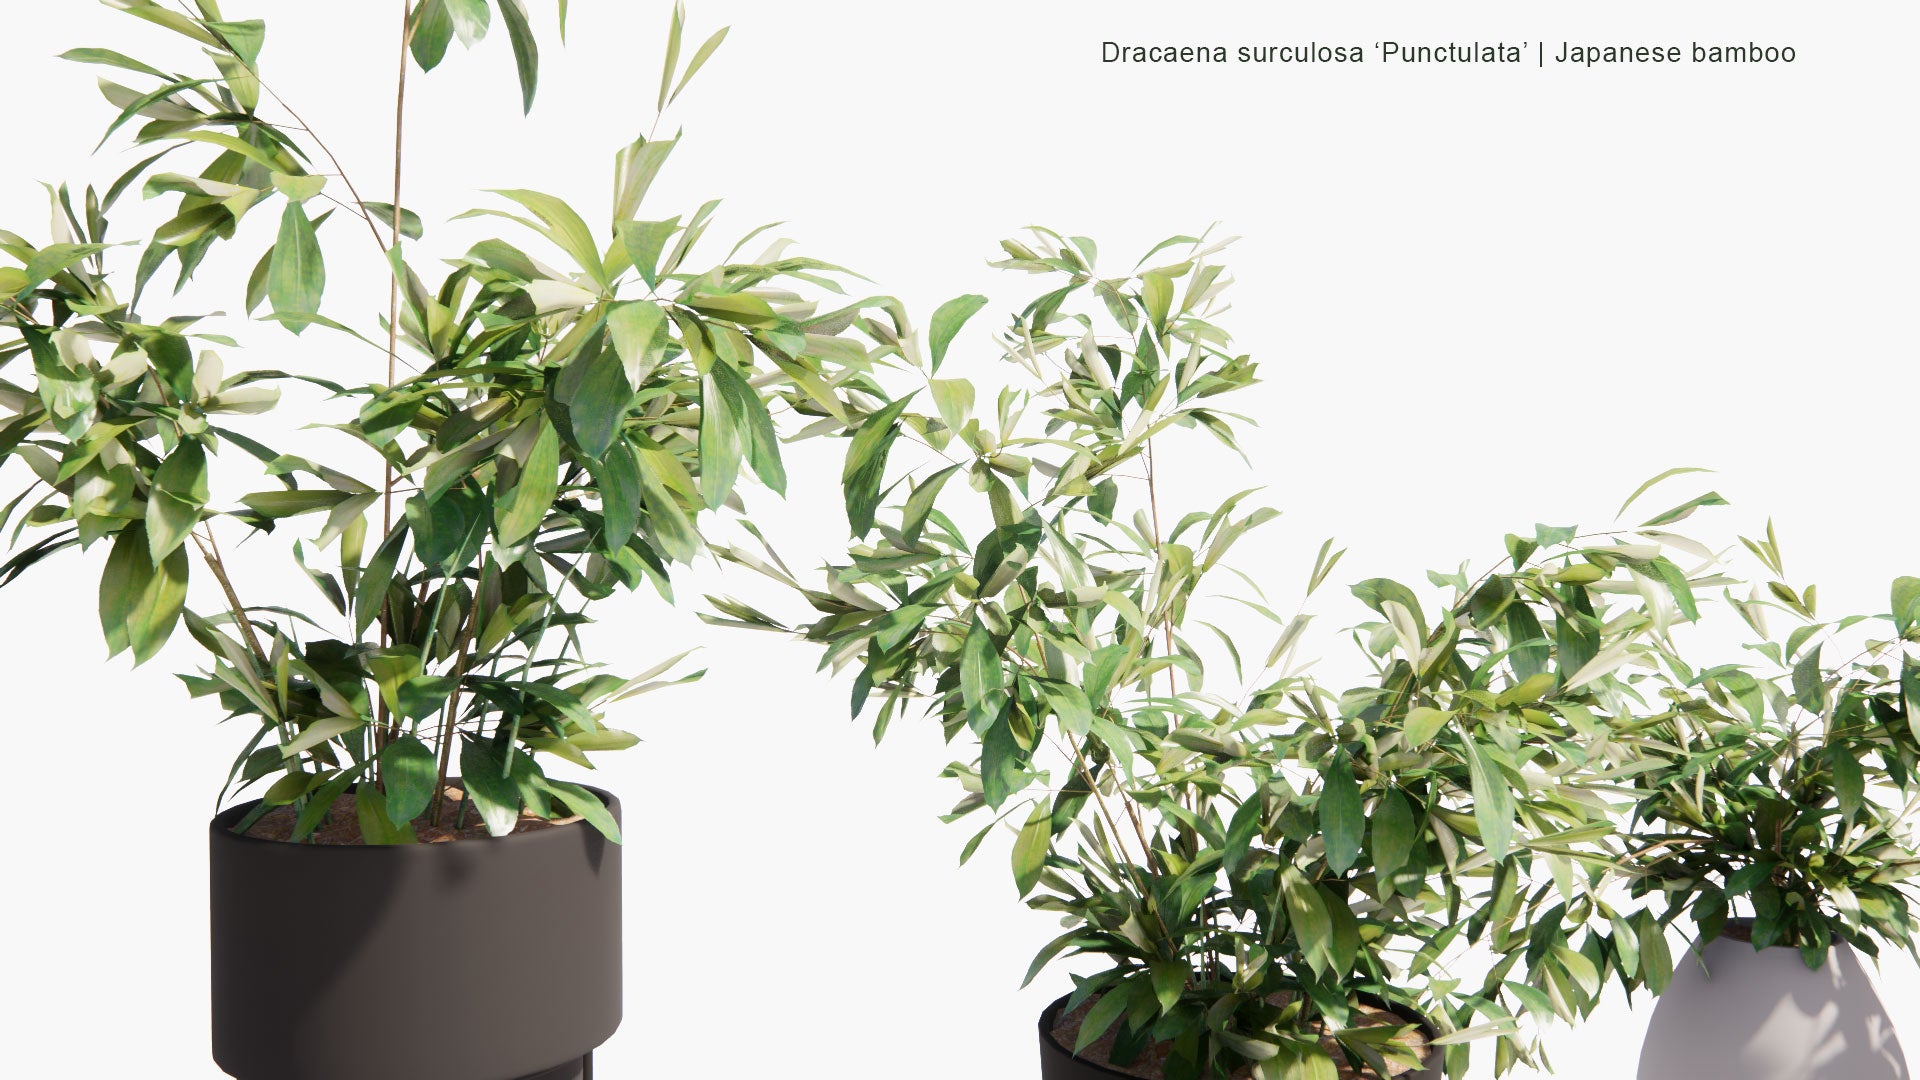 Low Poly Dracaena Surculosa 'Punctulata' - Florida Beauty, Gold Dust, Gold Dust Dracaena, Spotted Dracaena, Japanese Bamboo (3D Model)